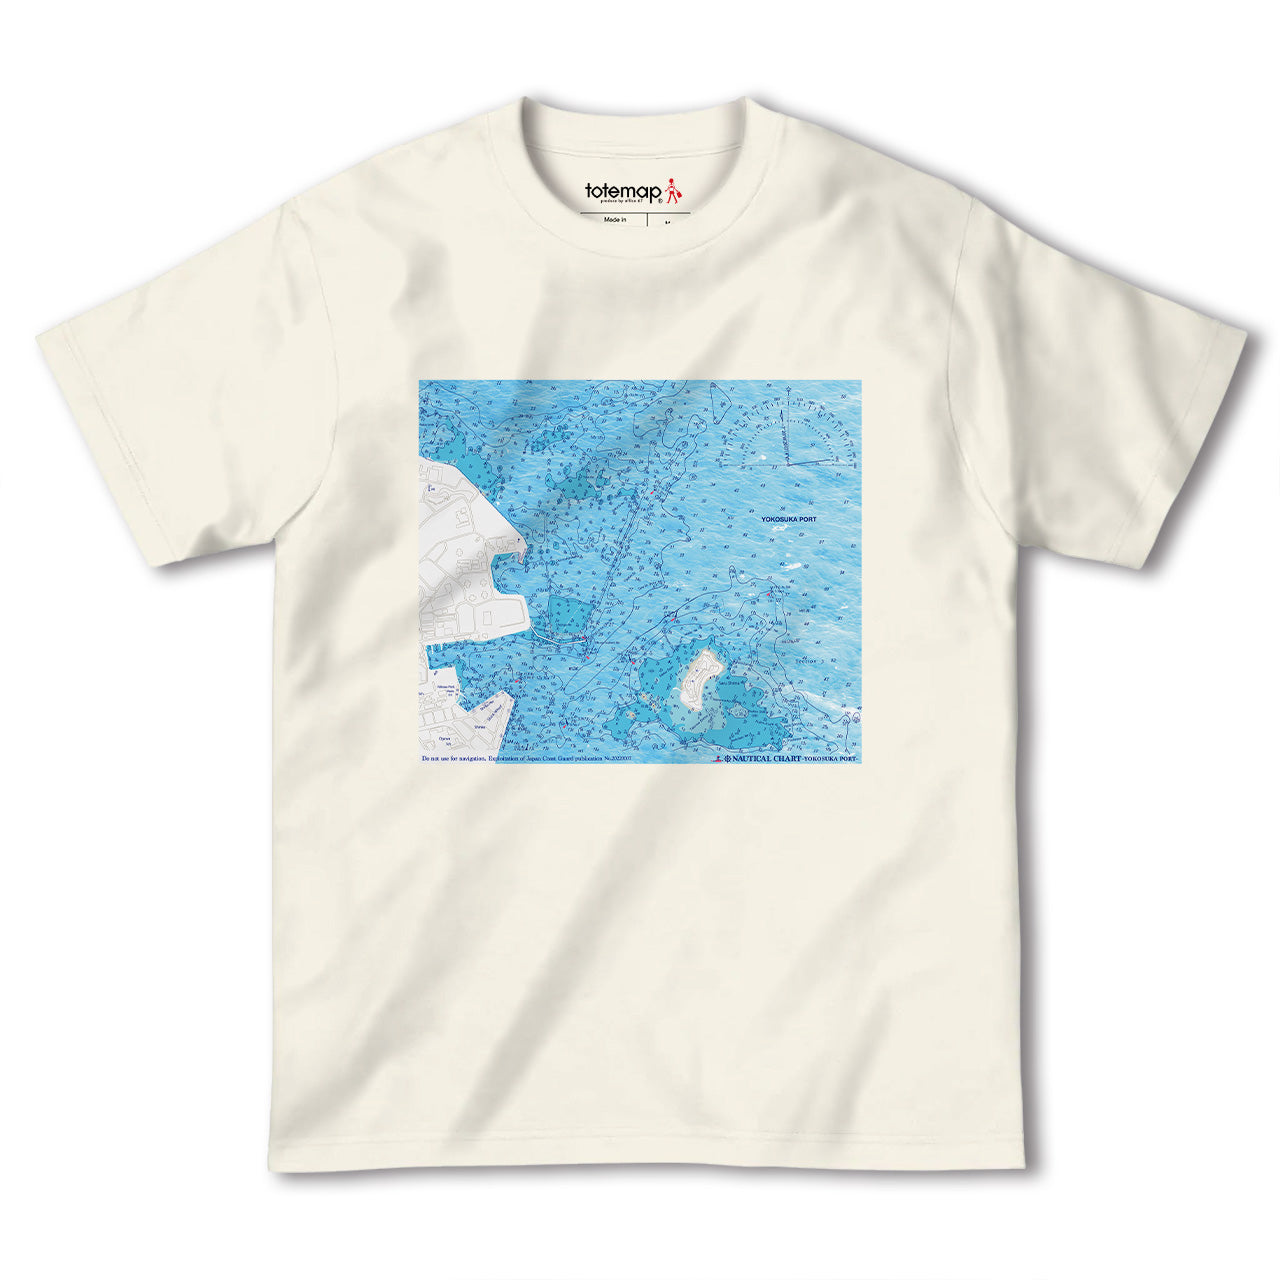 『横須賀港海図』半袖Tシャツ【送料無料】